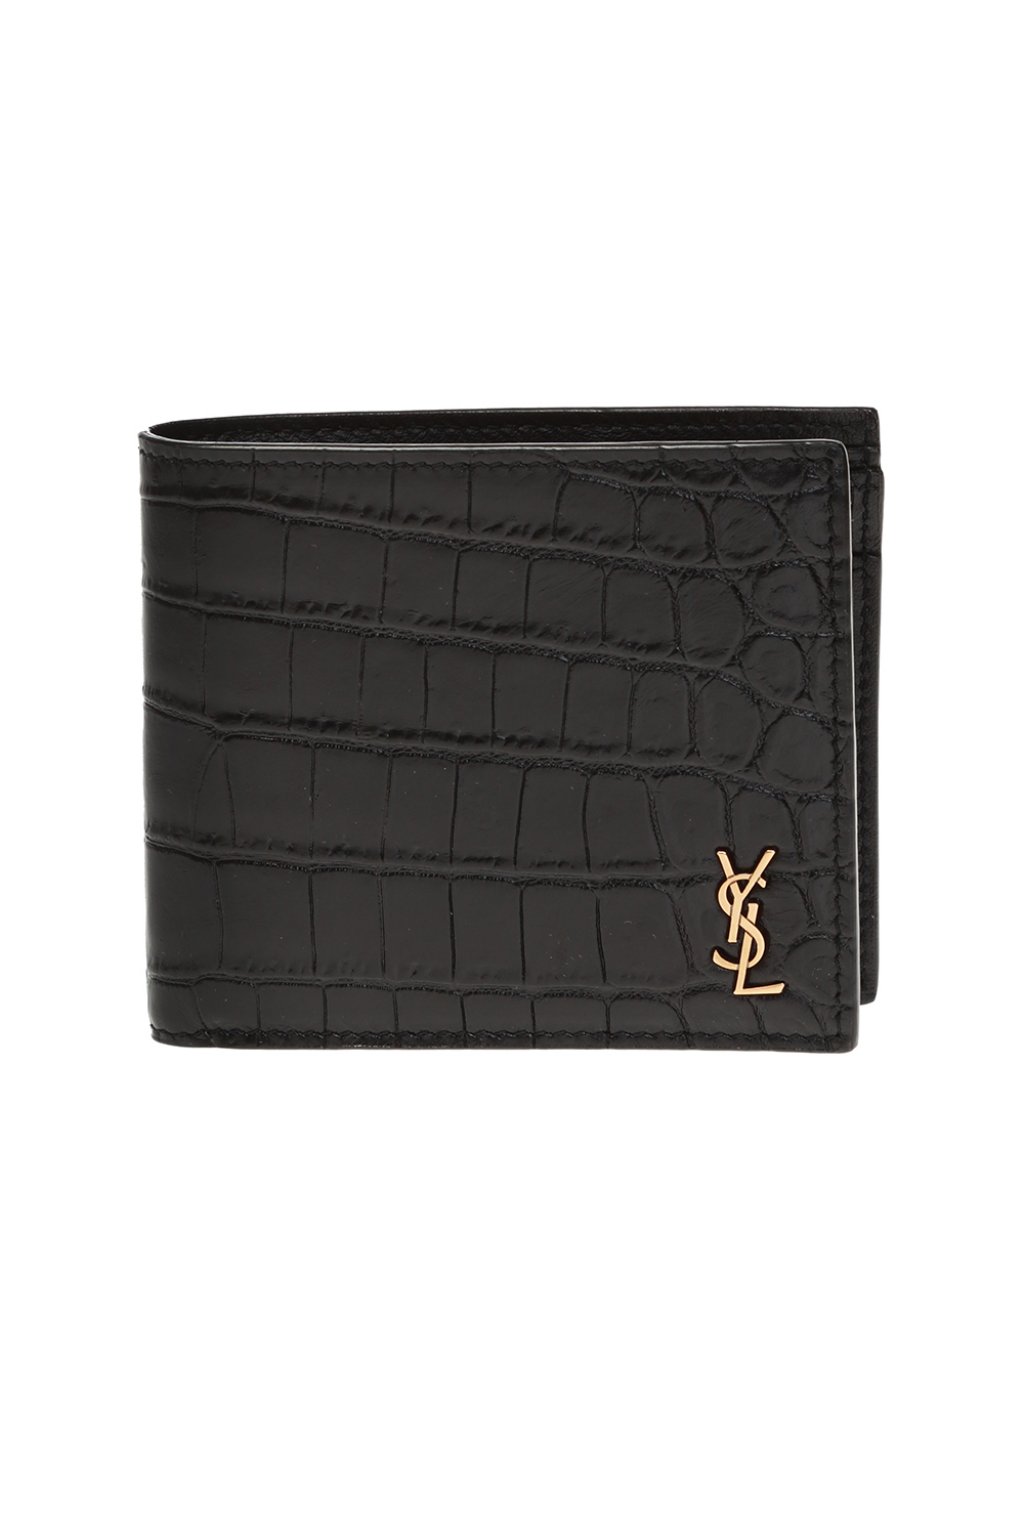 Saint Laurent Leather wallet with logo, Men's Accessories